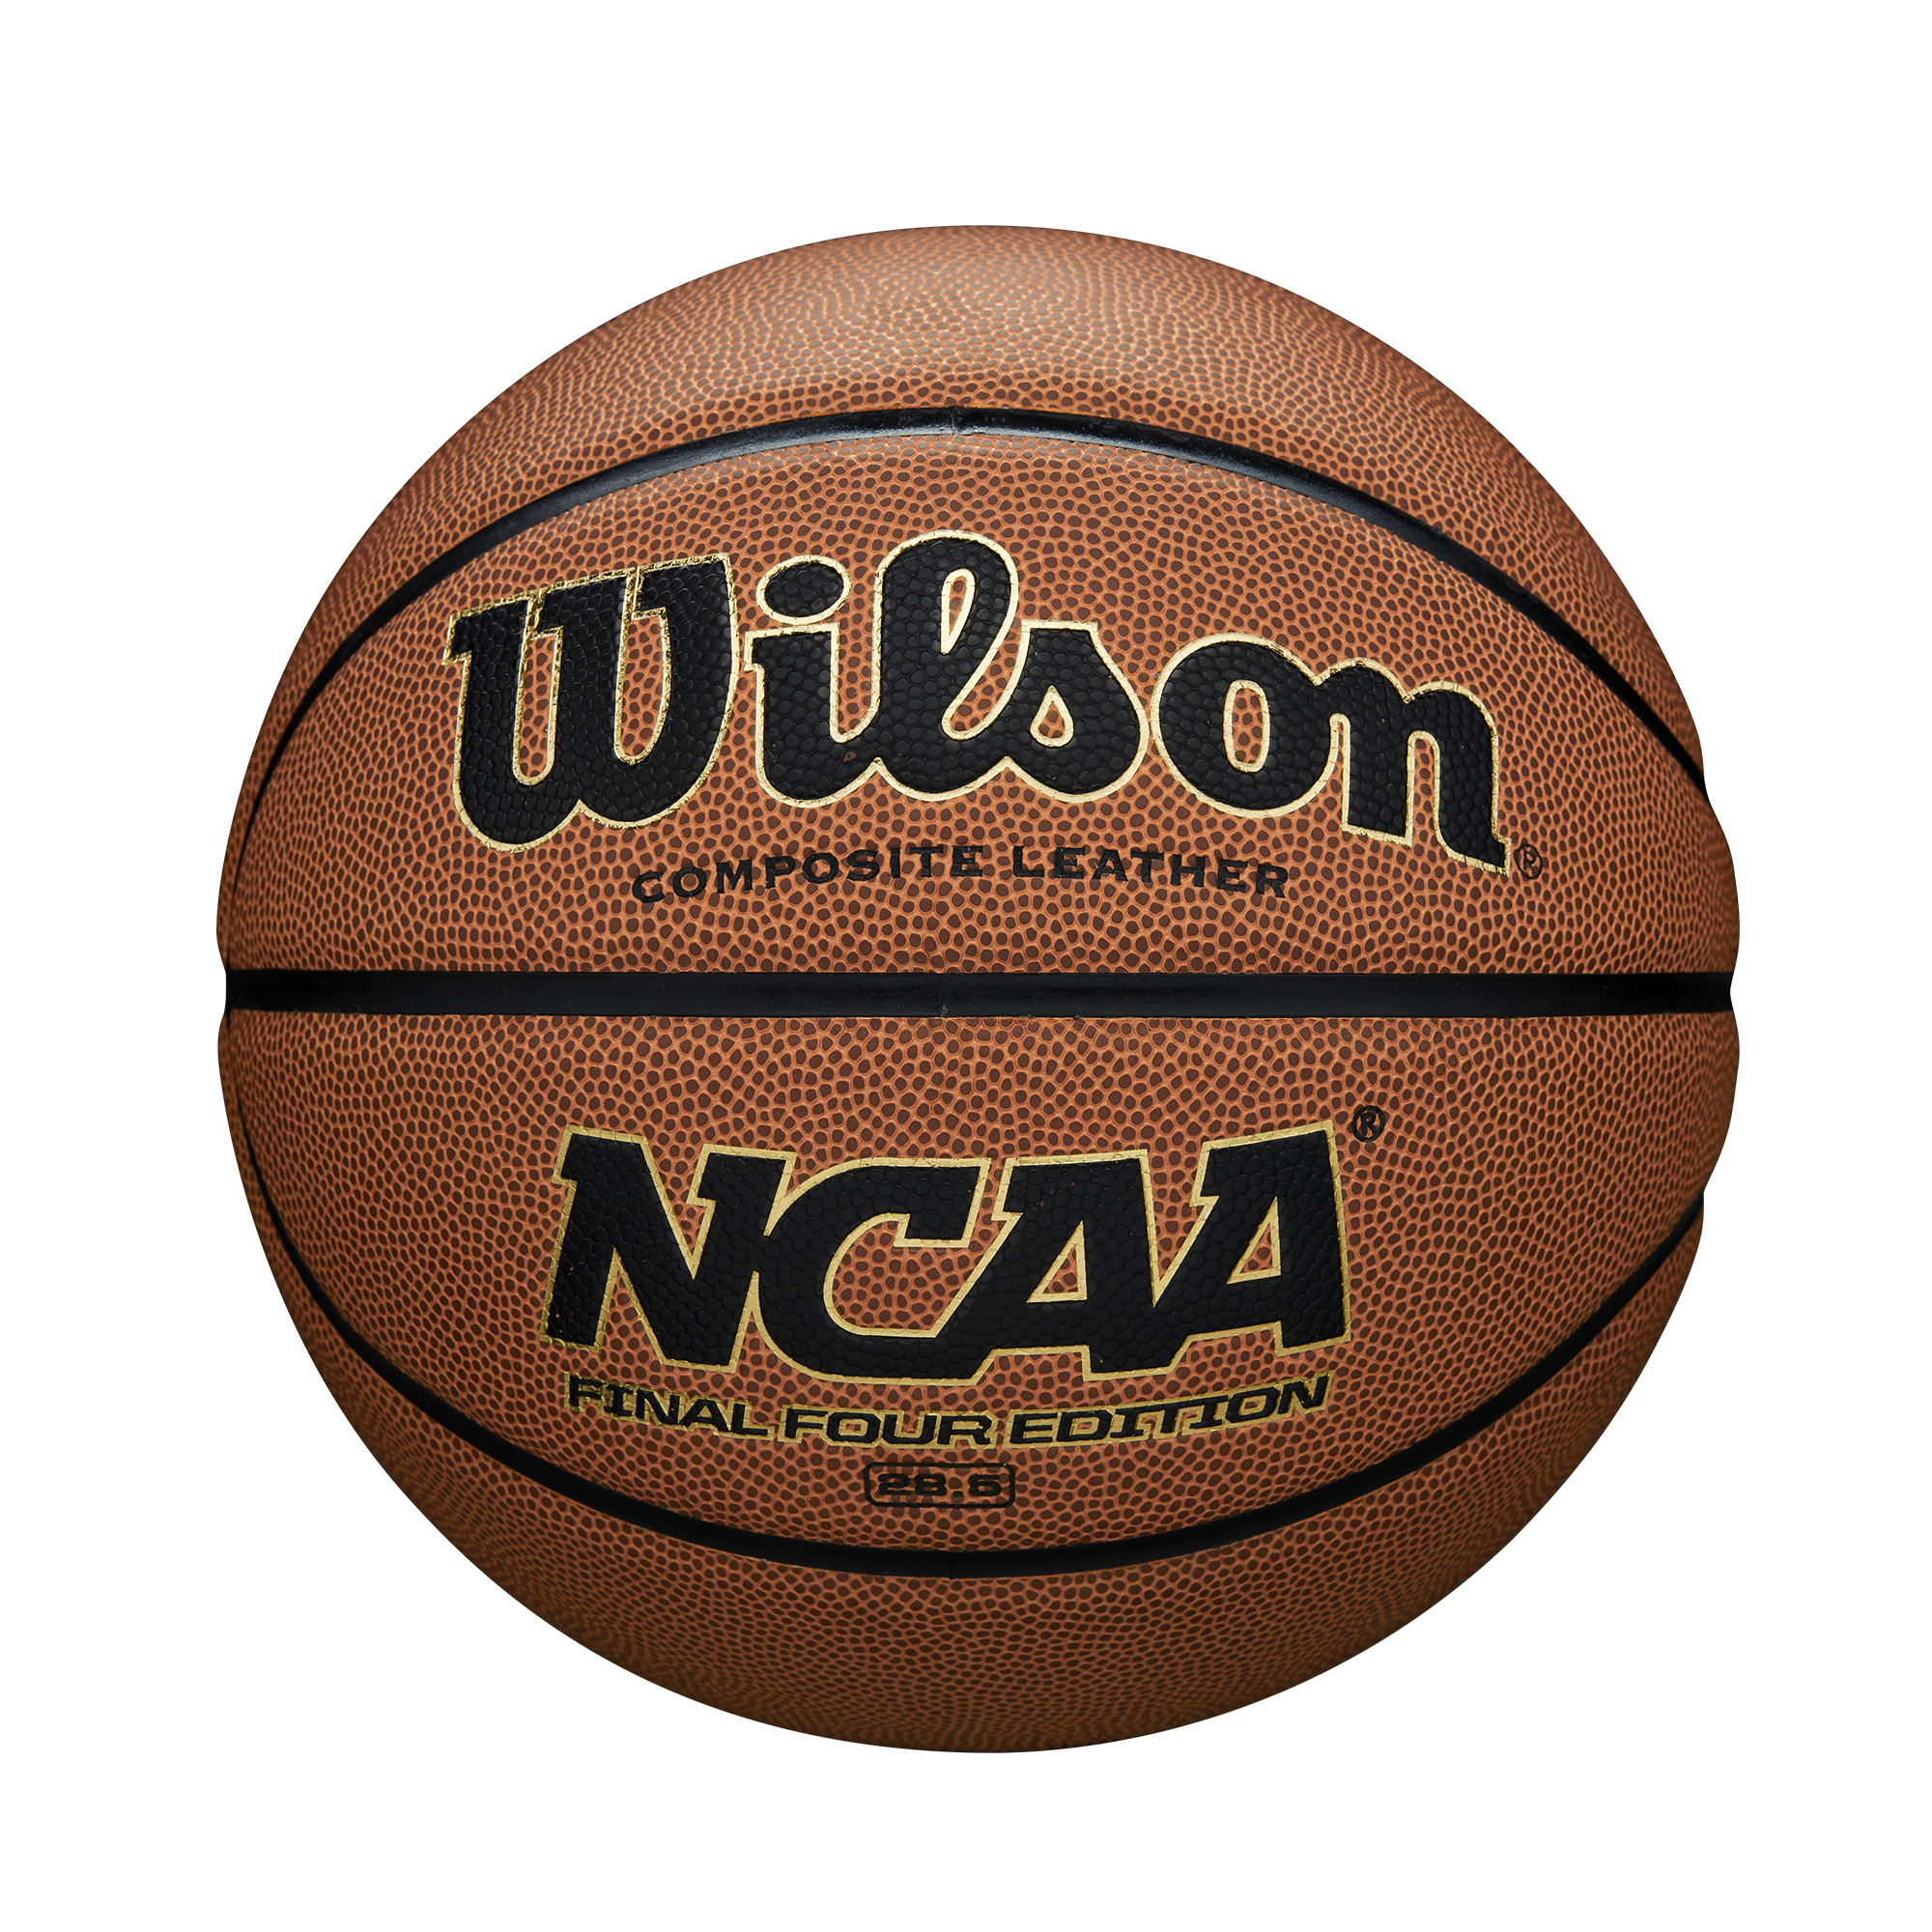 Wilson NCAA Final Four Edition Basketball, Intermediate Size - 28.5" - image 1 of 6